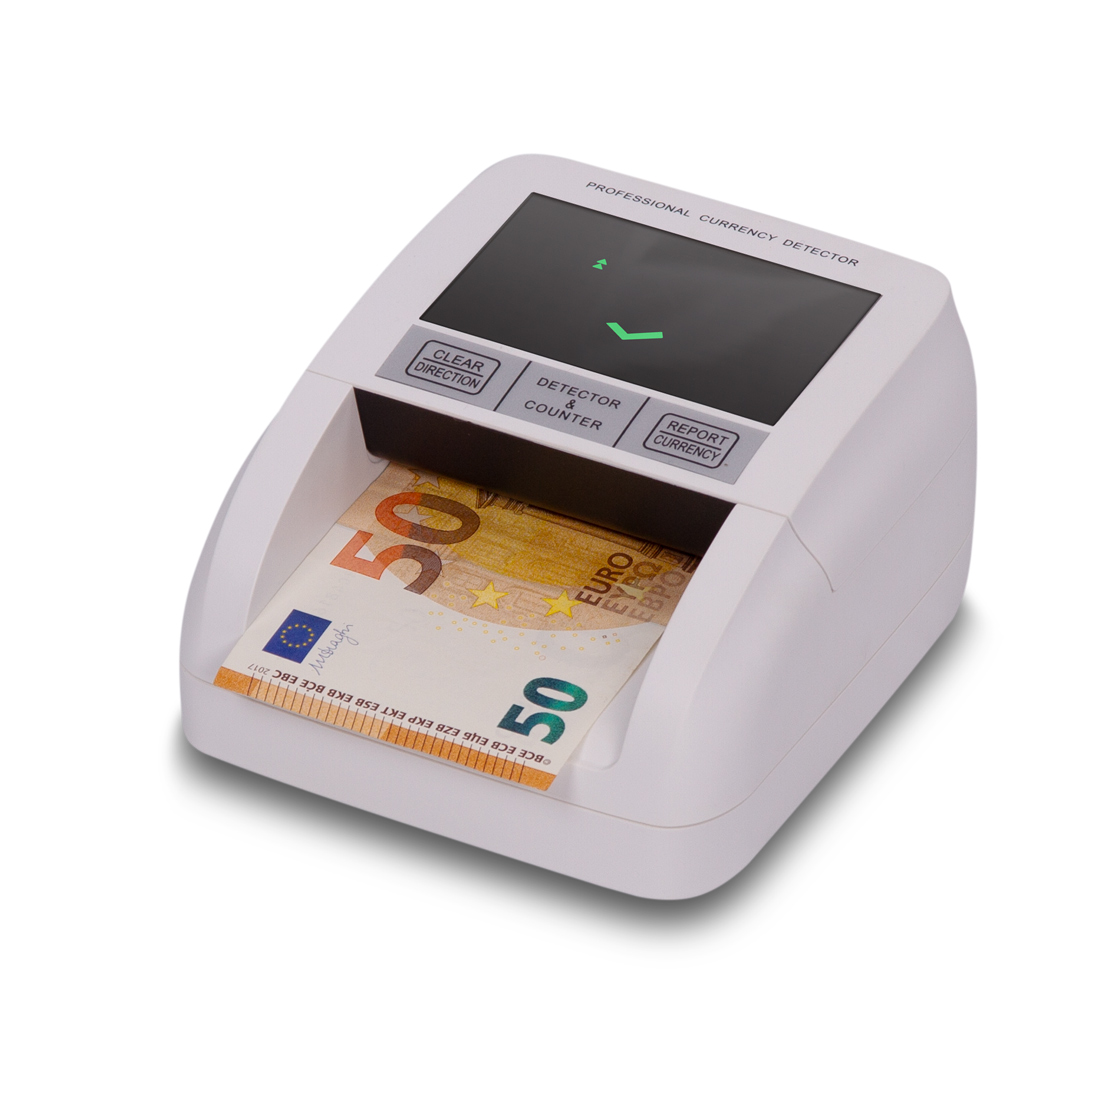 Counterfeit detector Pecunia BT 500